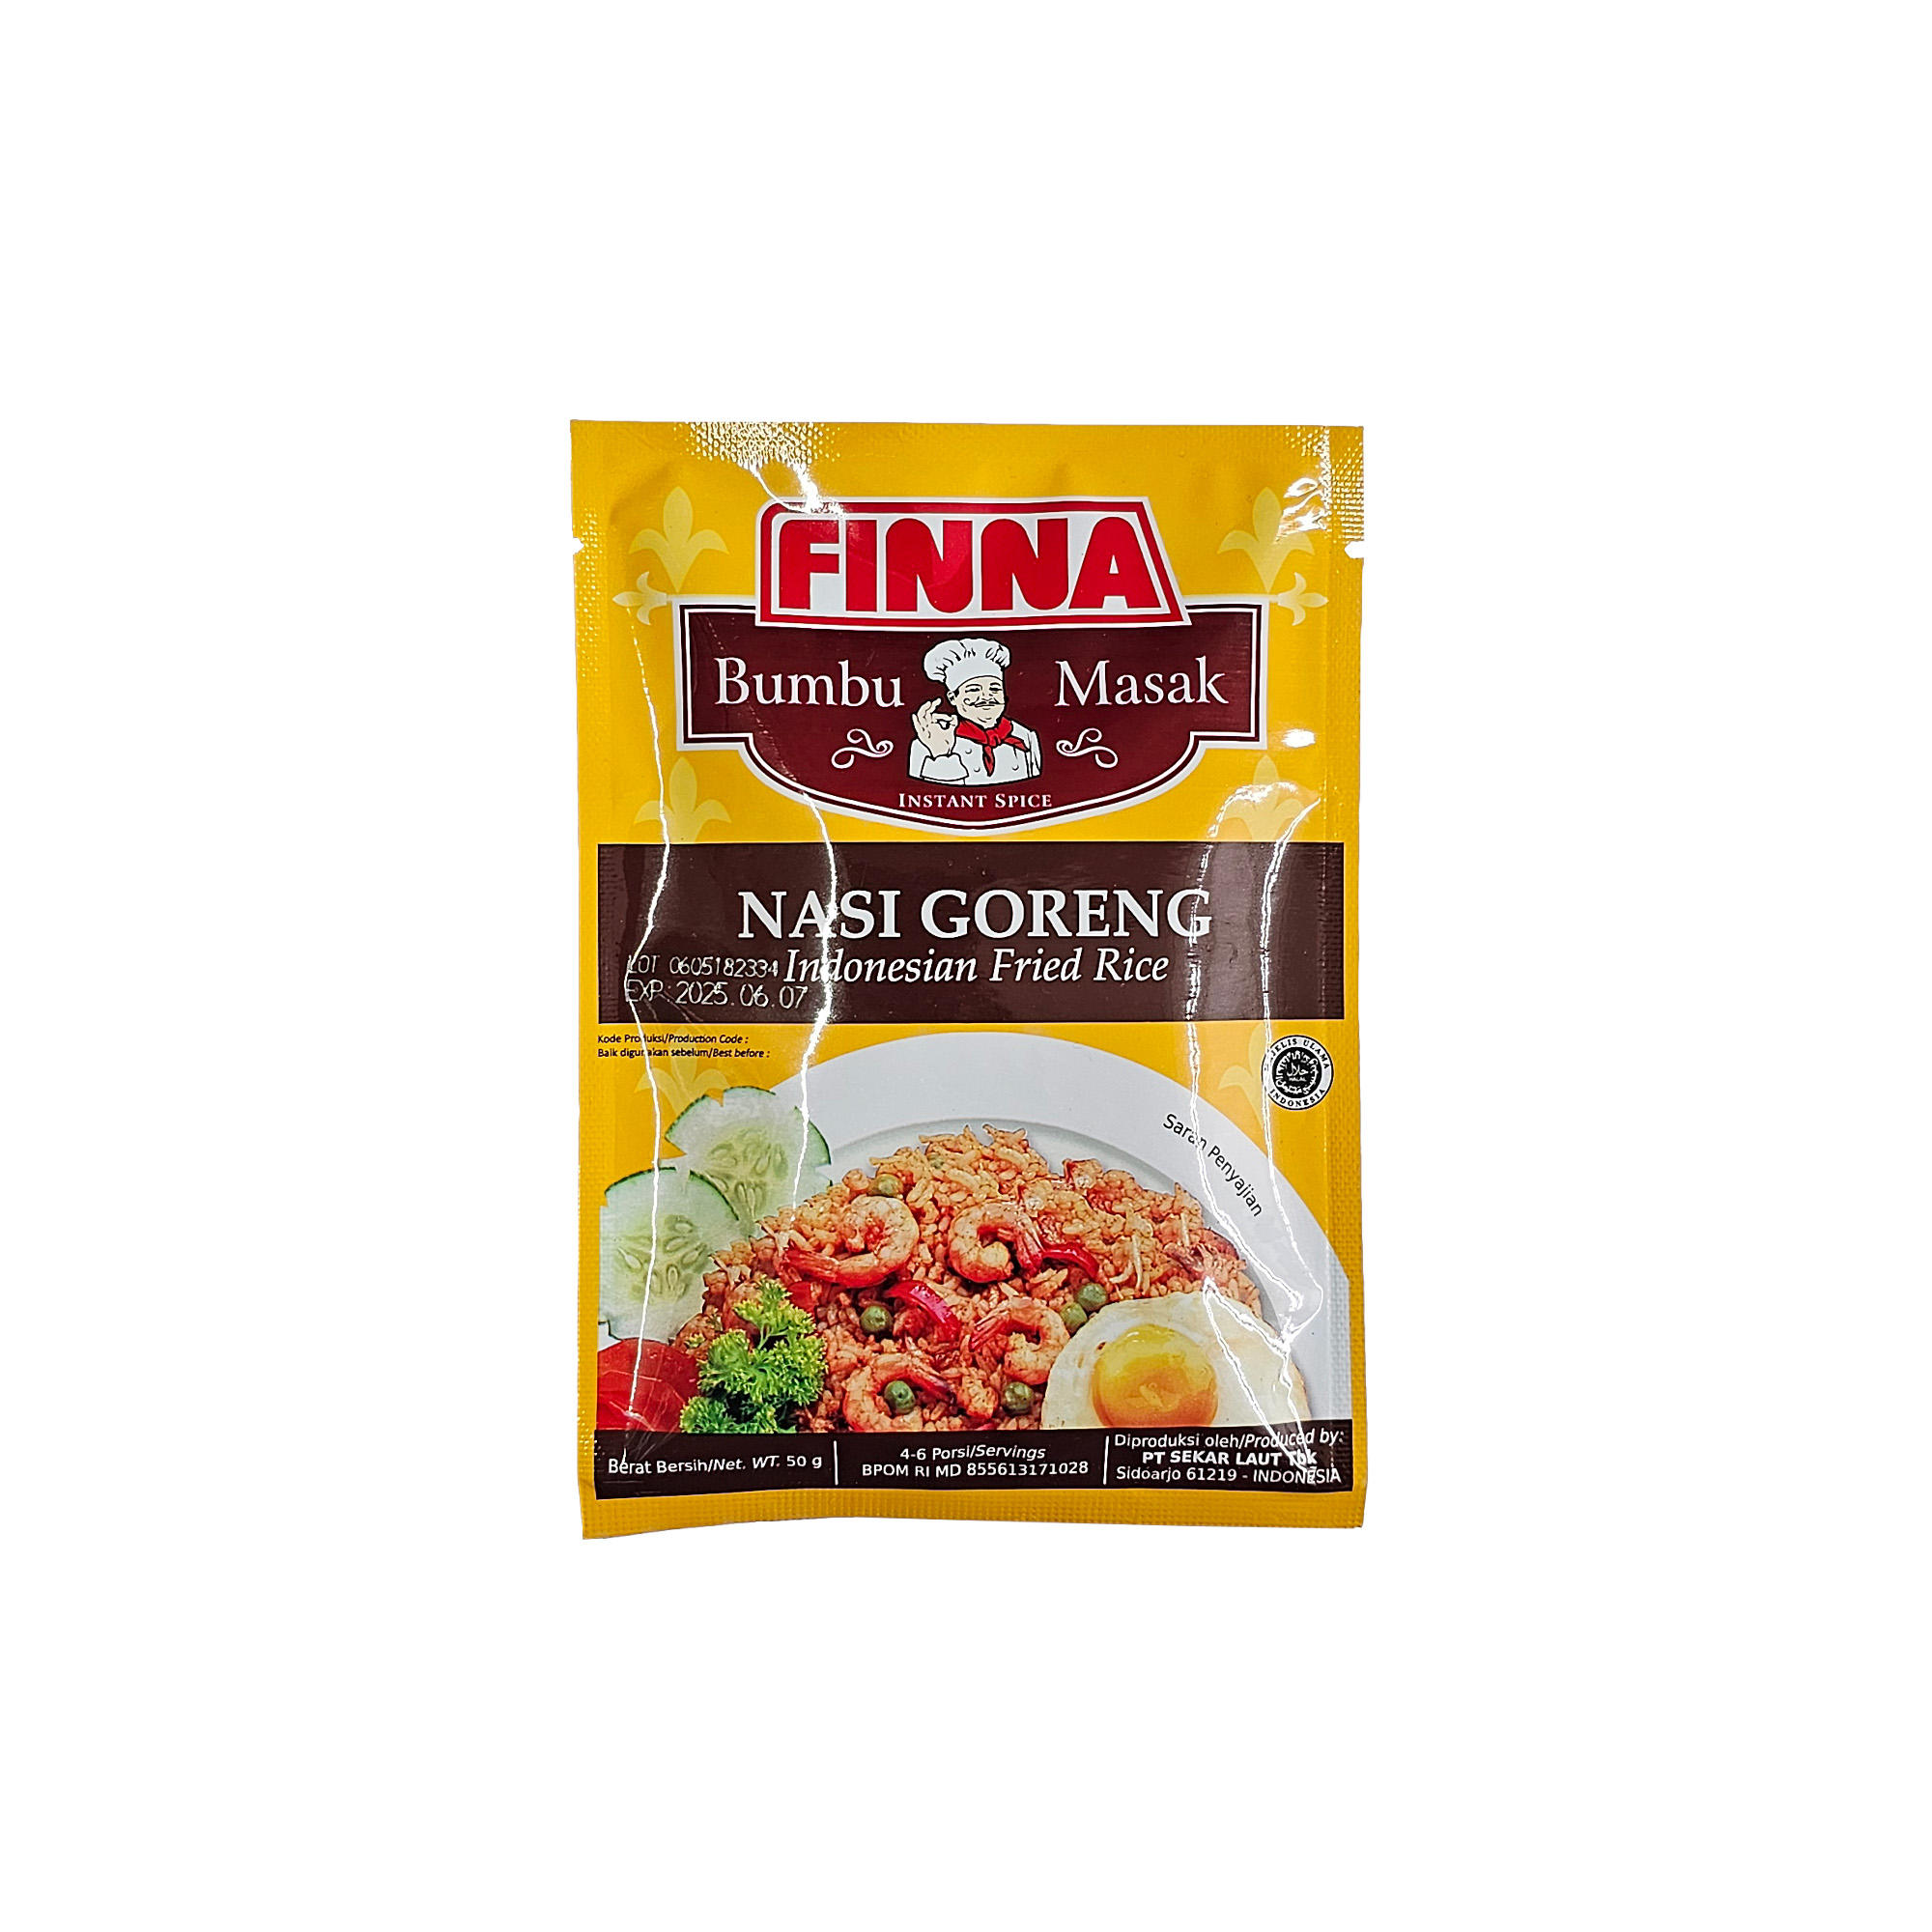 Nasi Goreng / Indonesian Fried Rice (Finna)